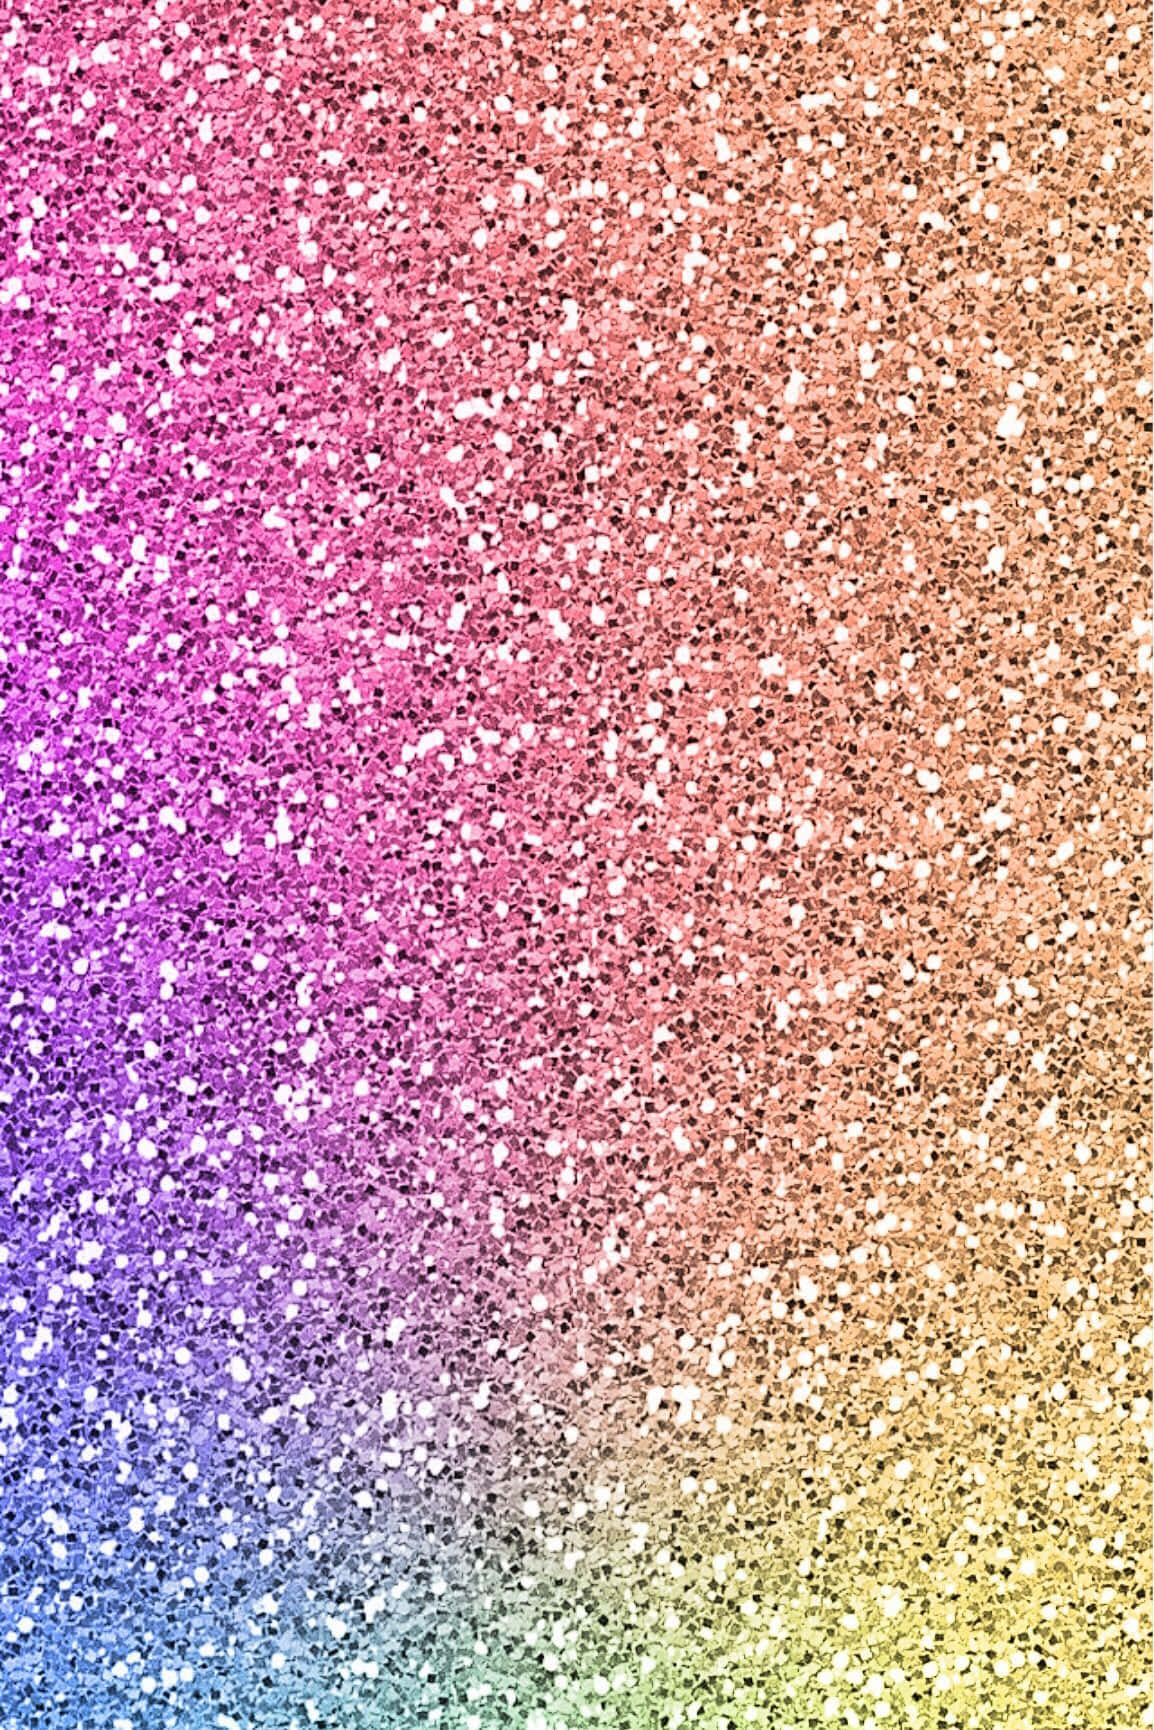 Mesmerizing Spectrum Of Rainbow Glitter Background